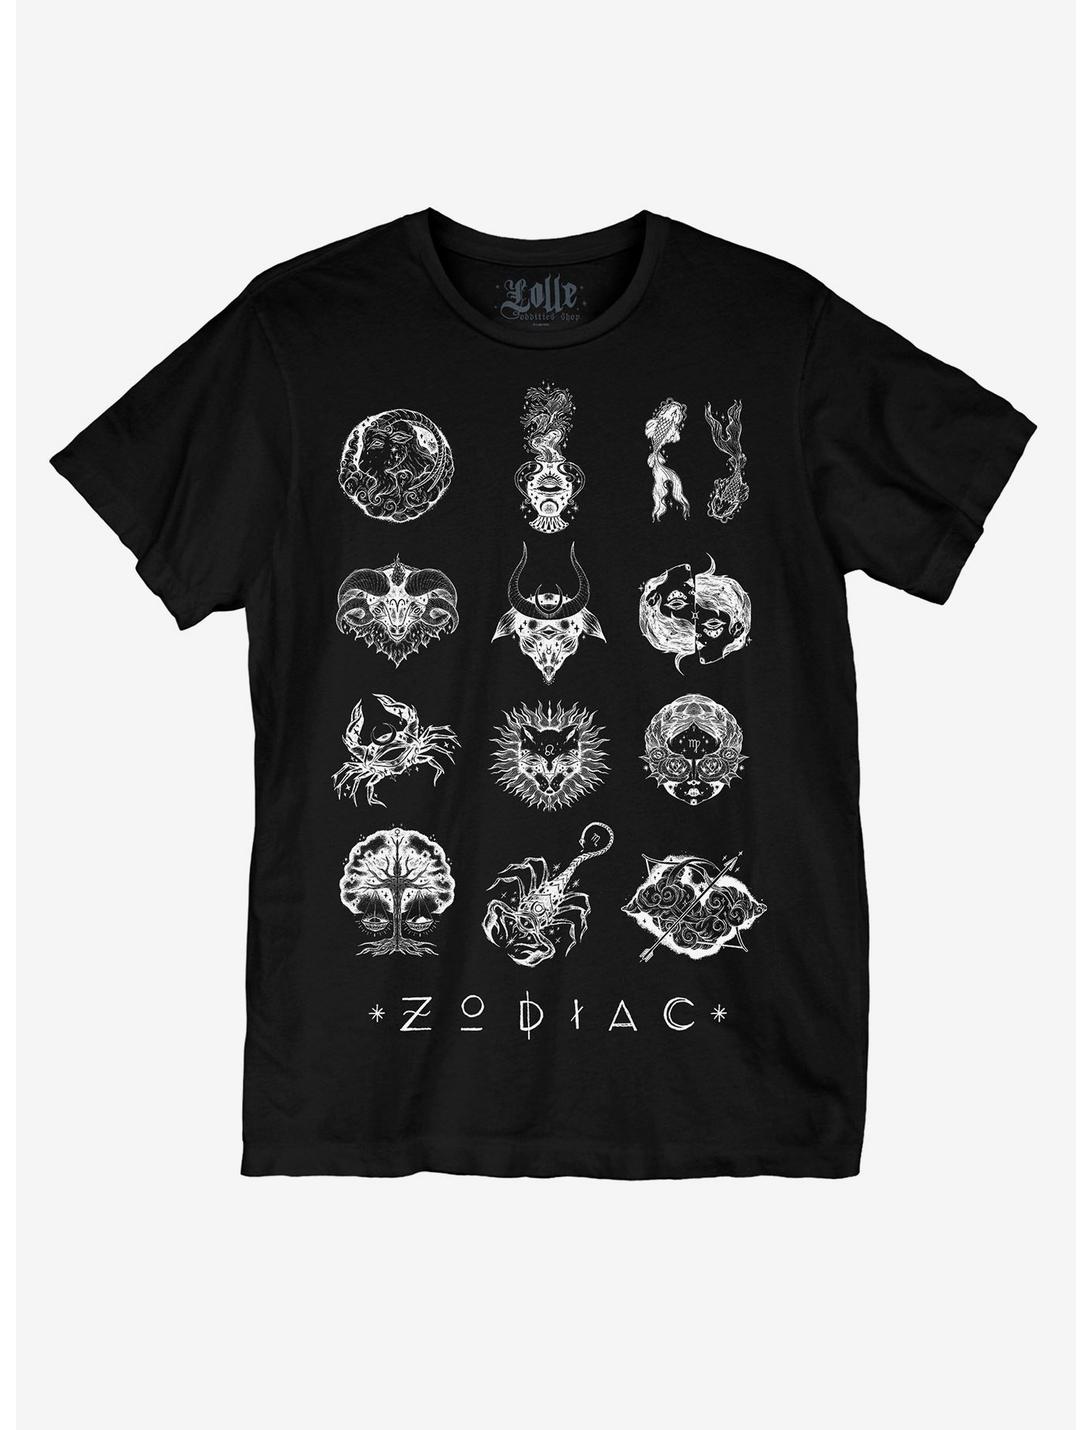 Zodiac Girls T-Shirt By Lolle, MULTI, hi-res